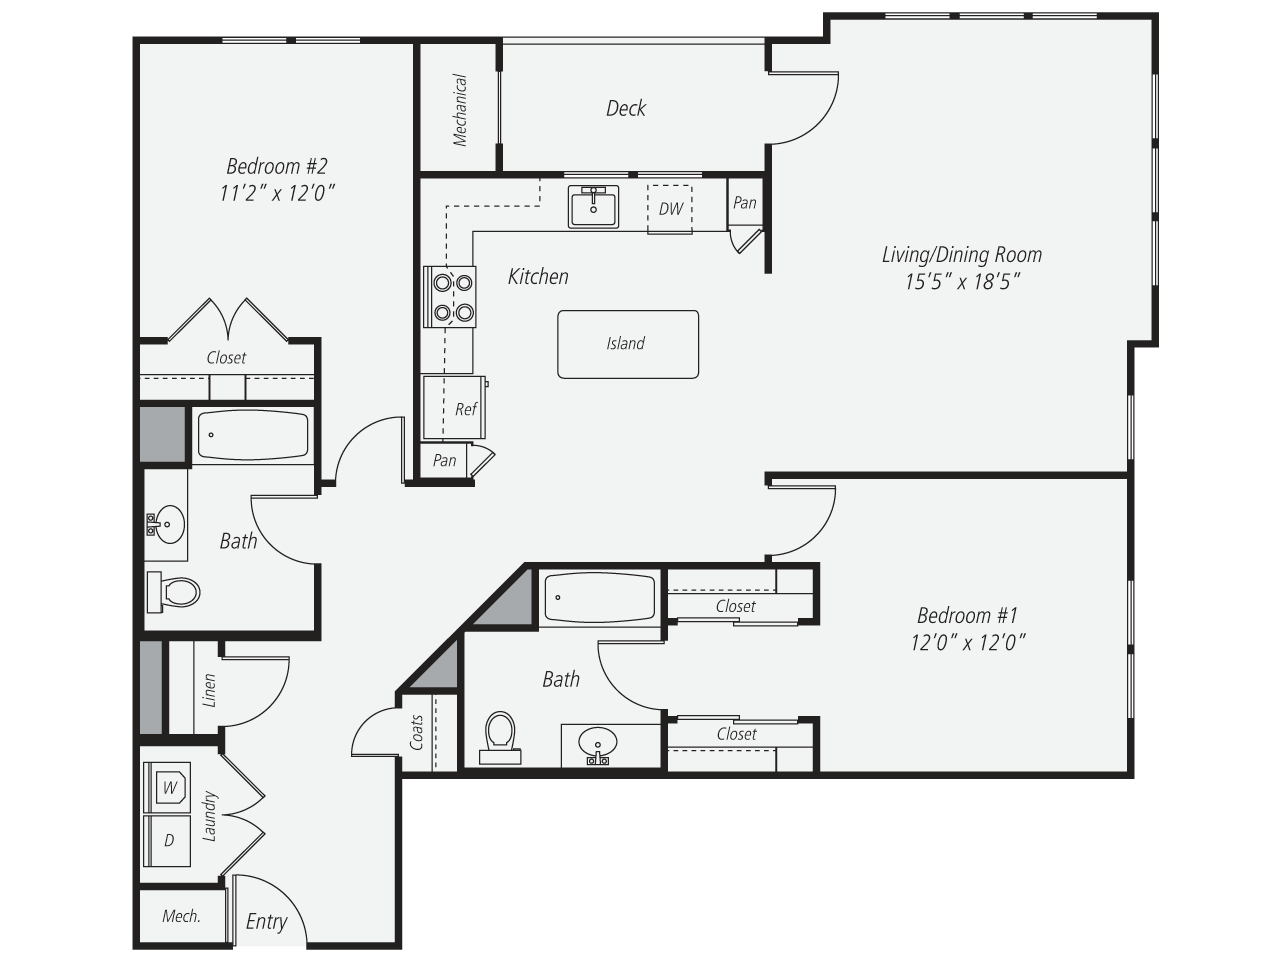 Floorplan for Apartment #265, 2 bedroom unit at Halstead Norwalk